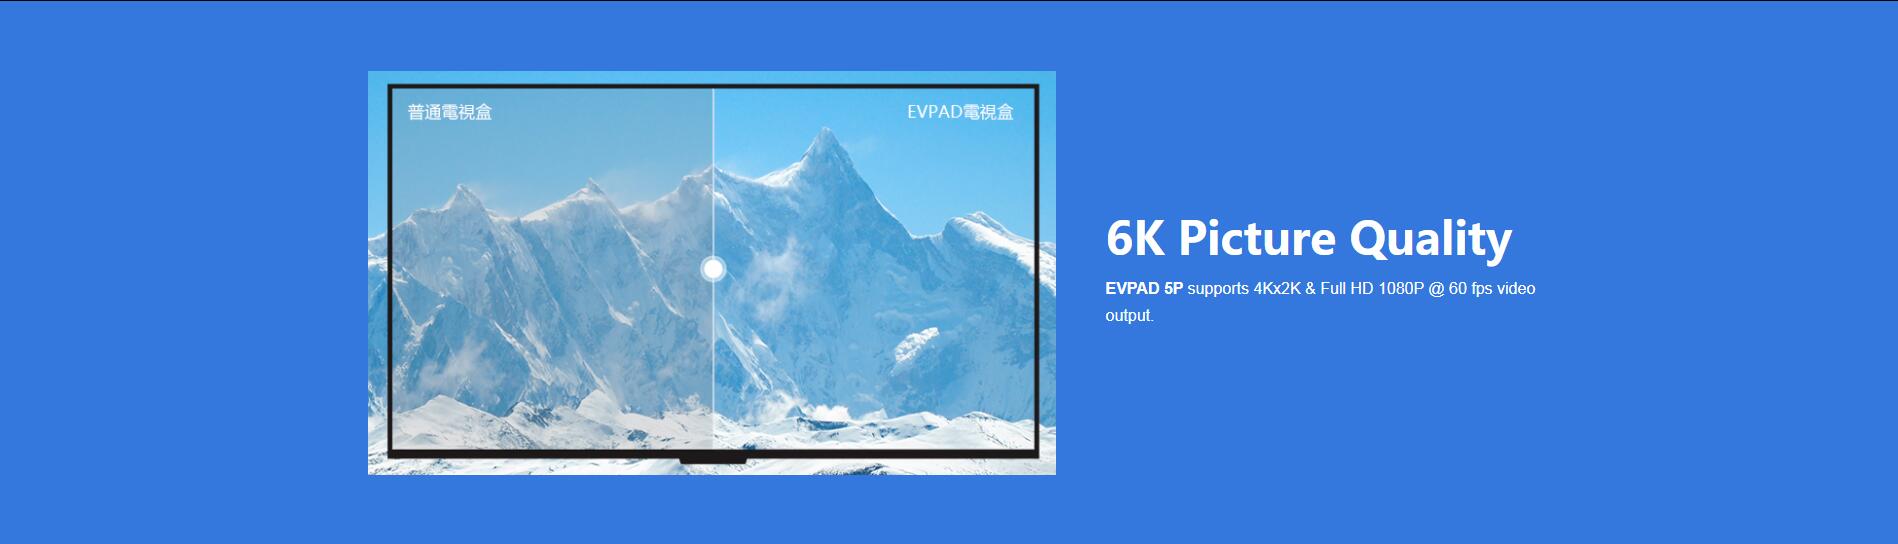 EVPAD 5P TV Box - 6K Picture Quality